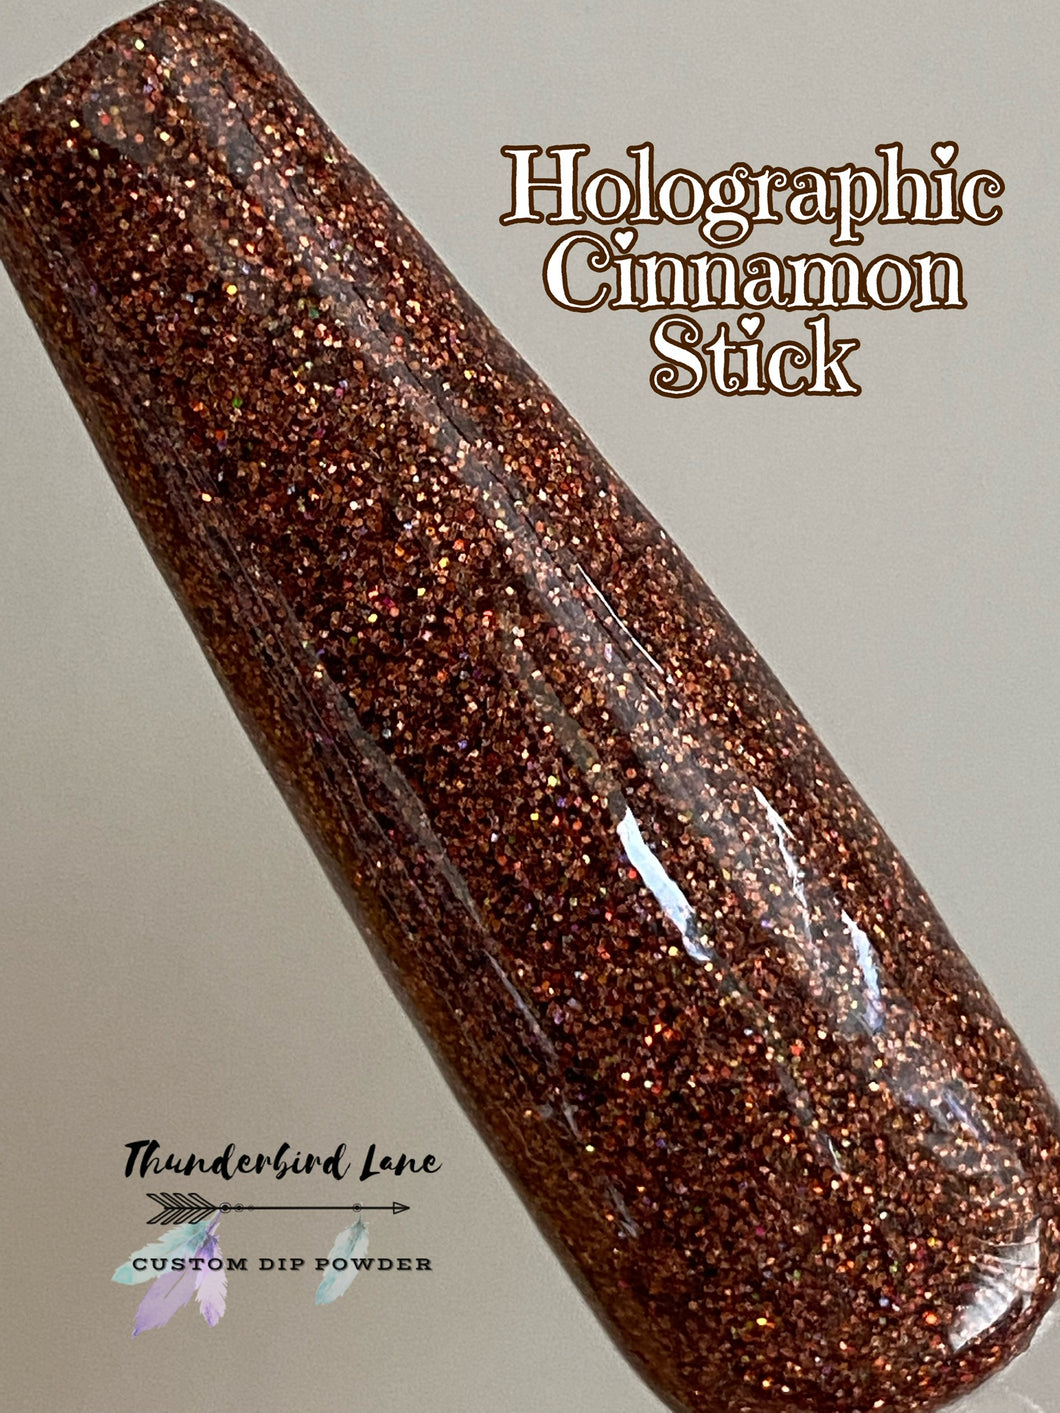 Holographic Cinnamon Stick